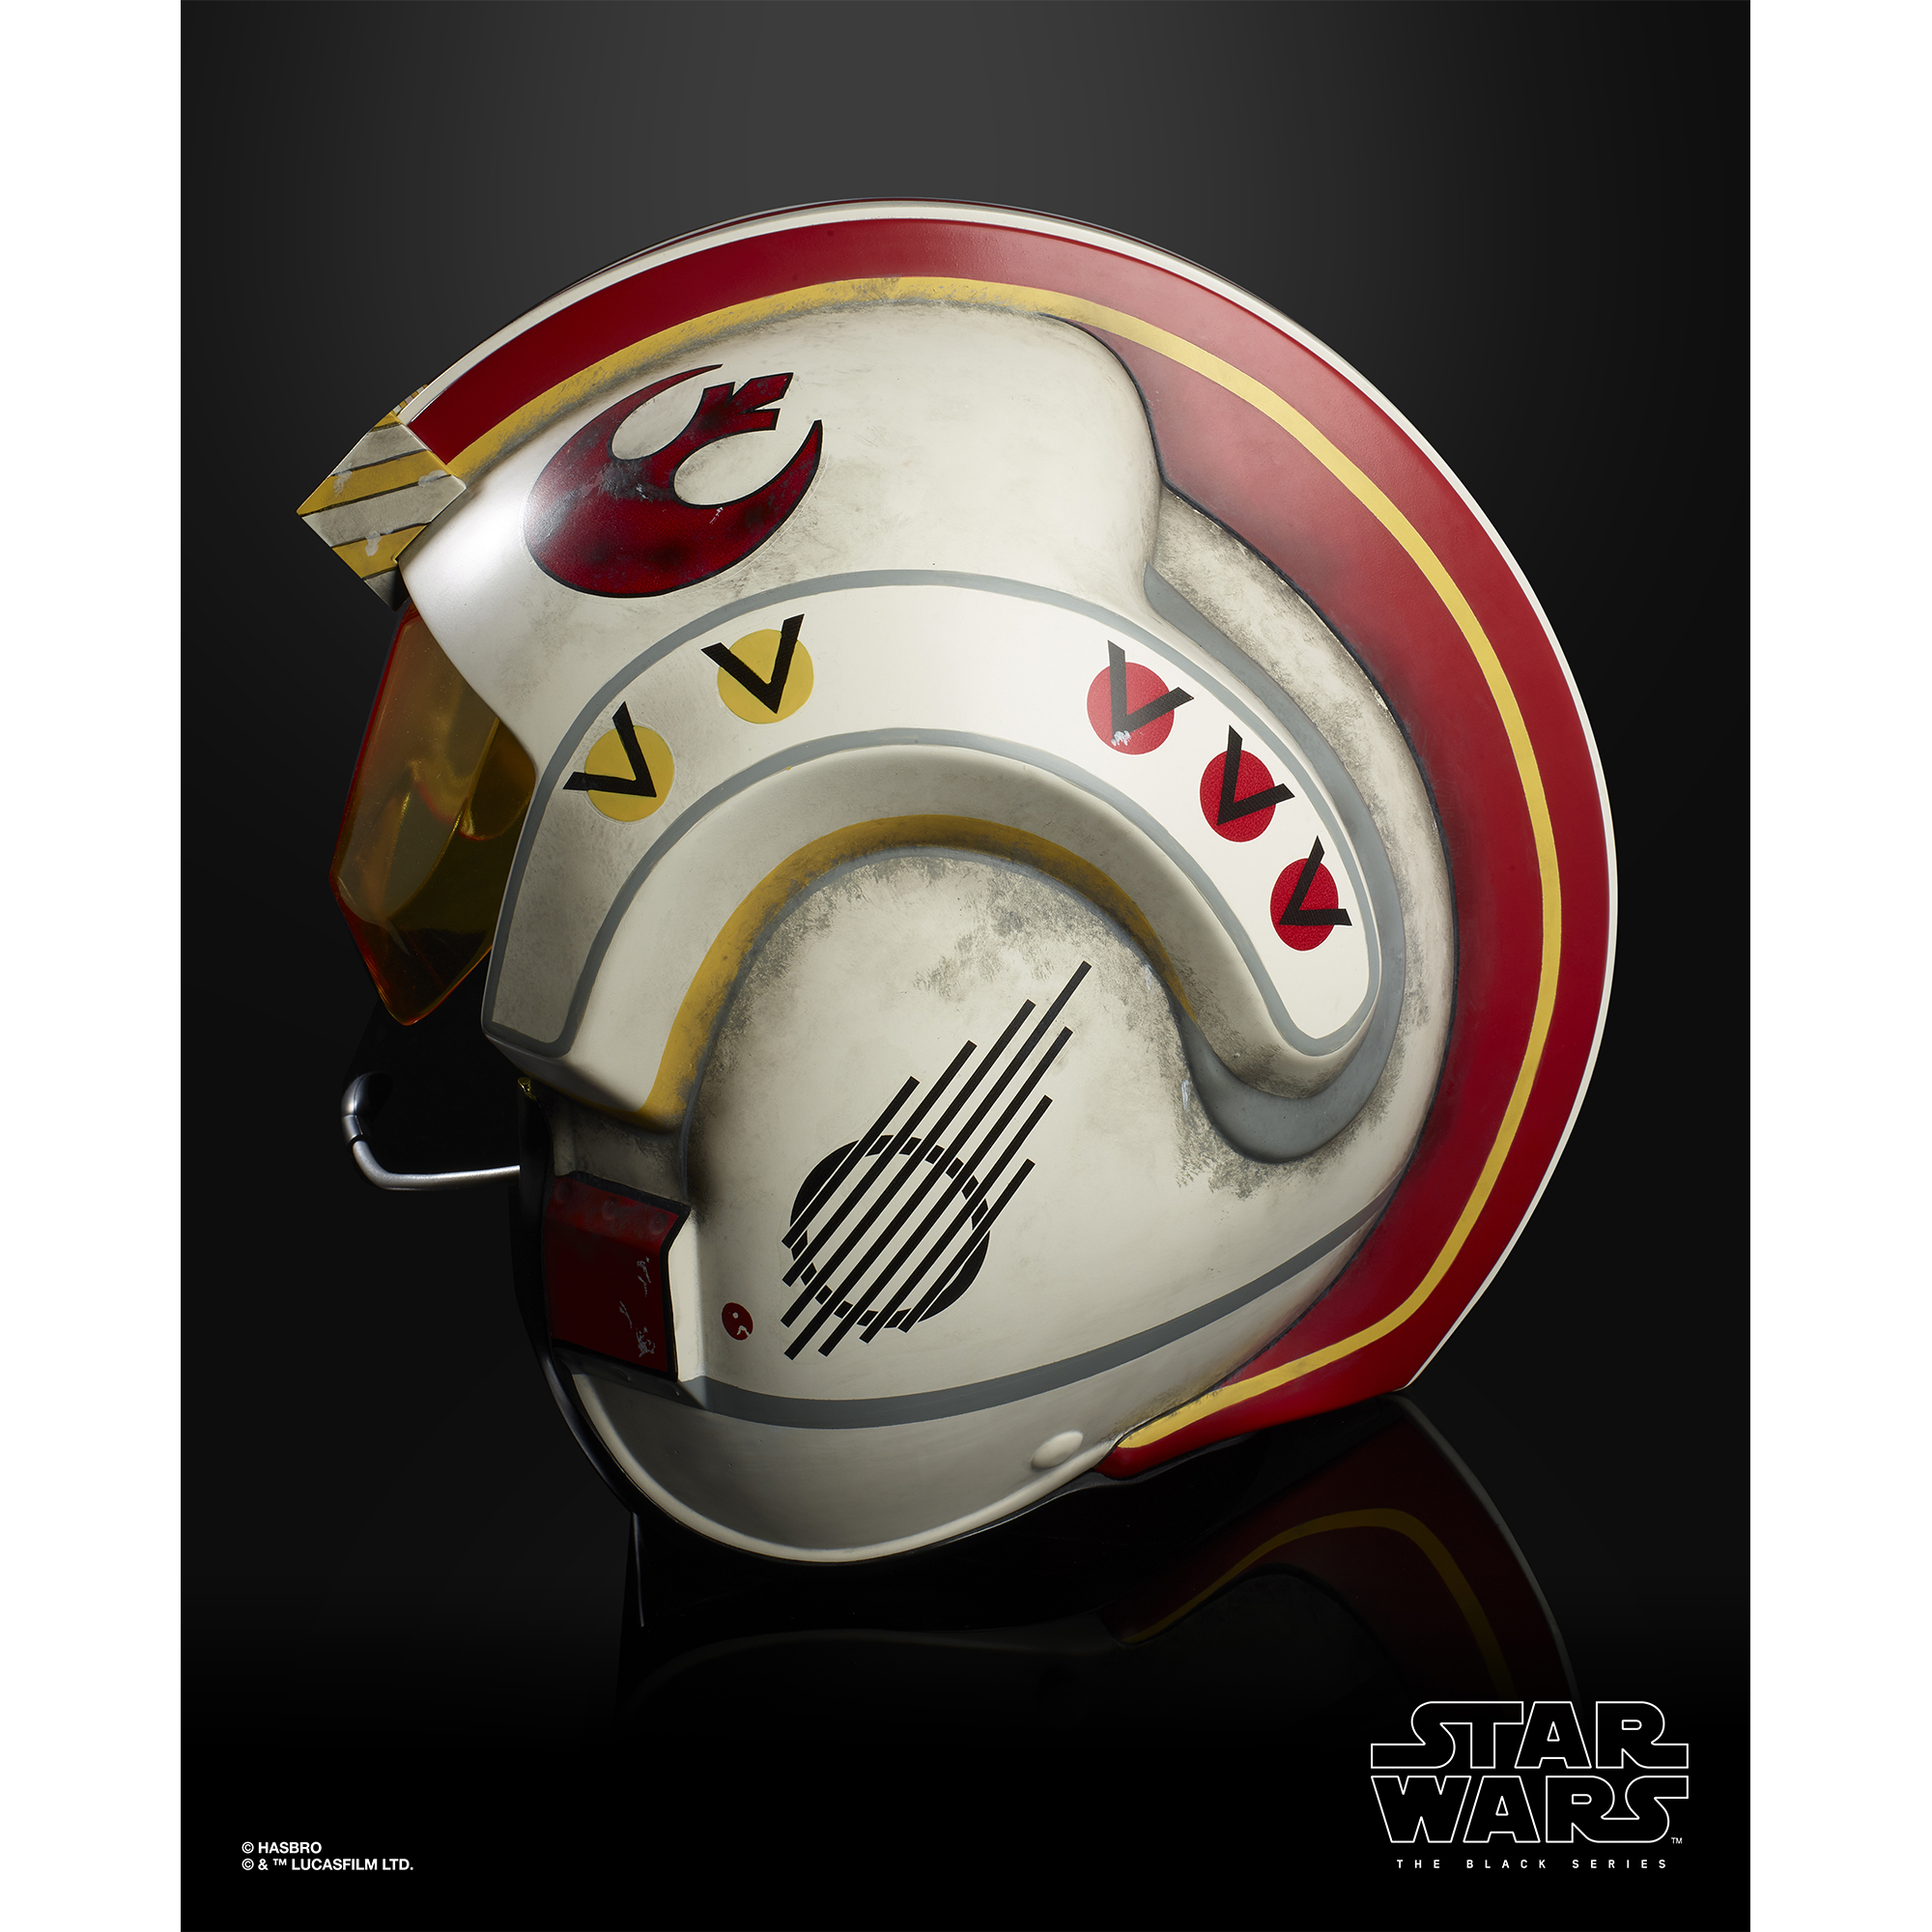 Star Wars The Black Series Luke Skywalker Battle Simulation Helmet - image 4 of 10